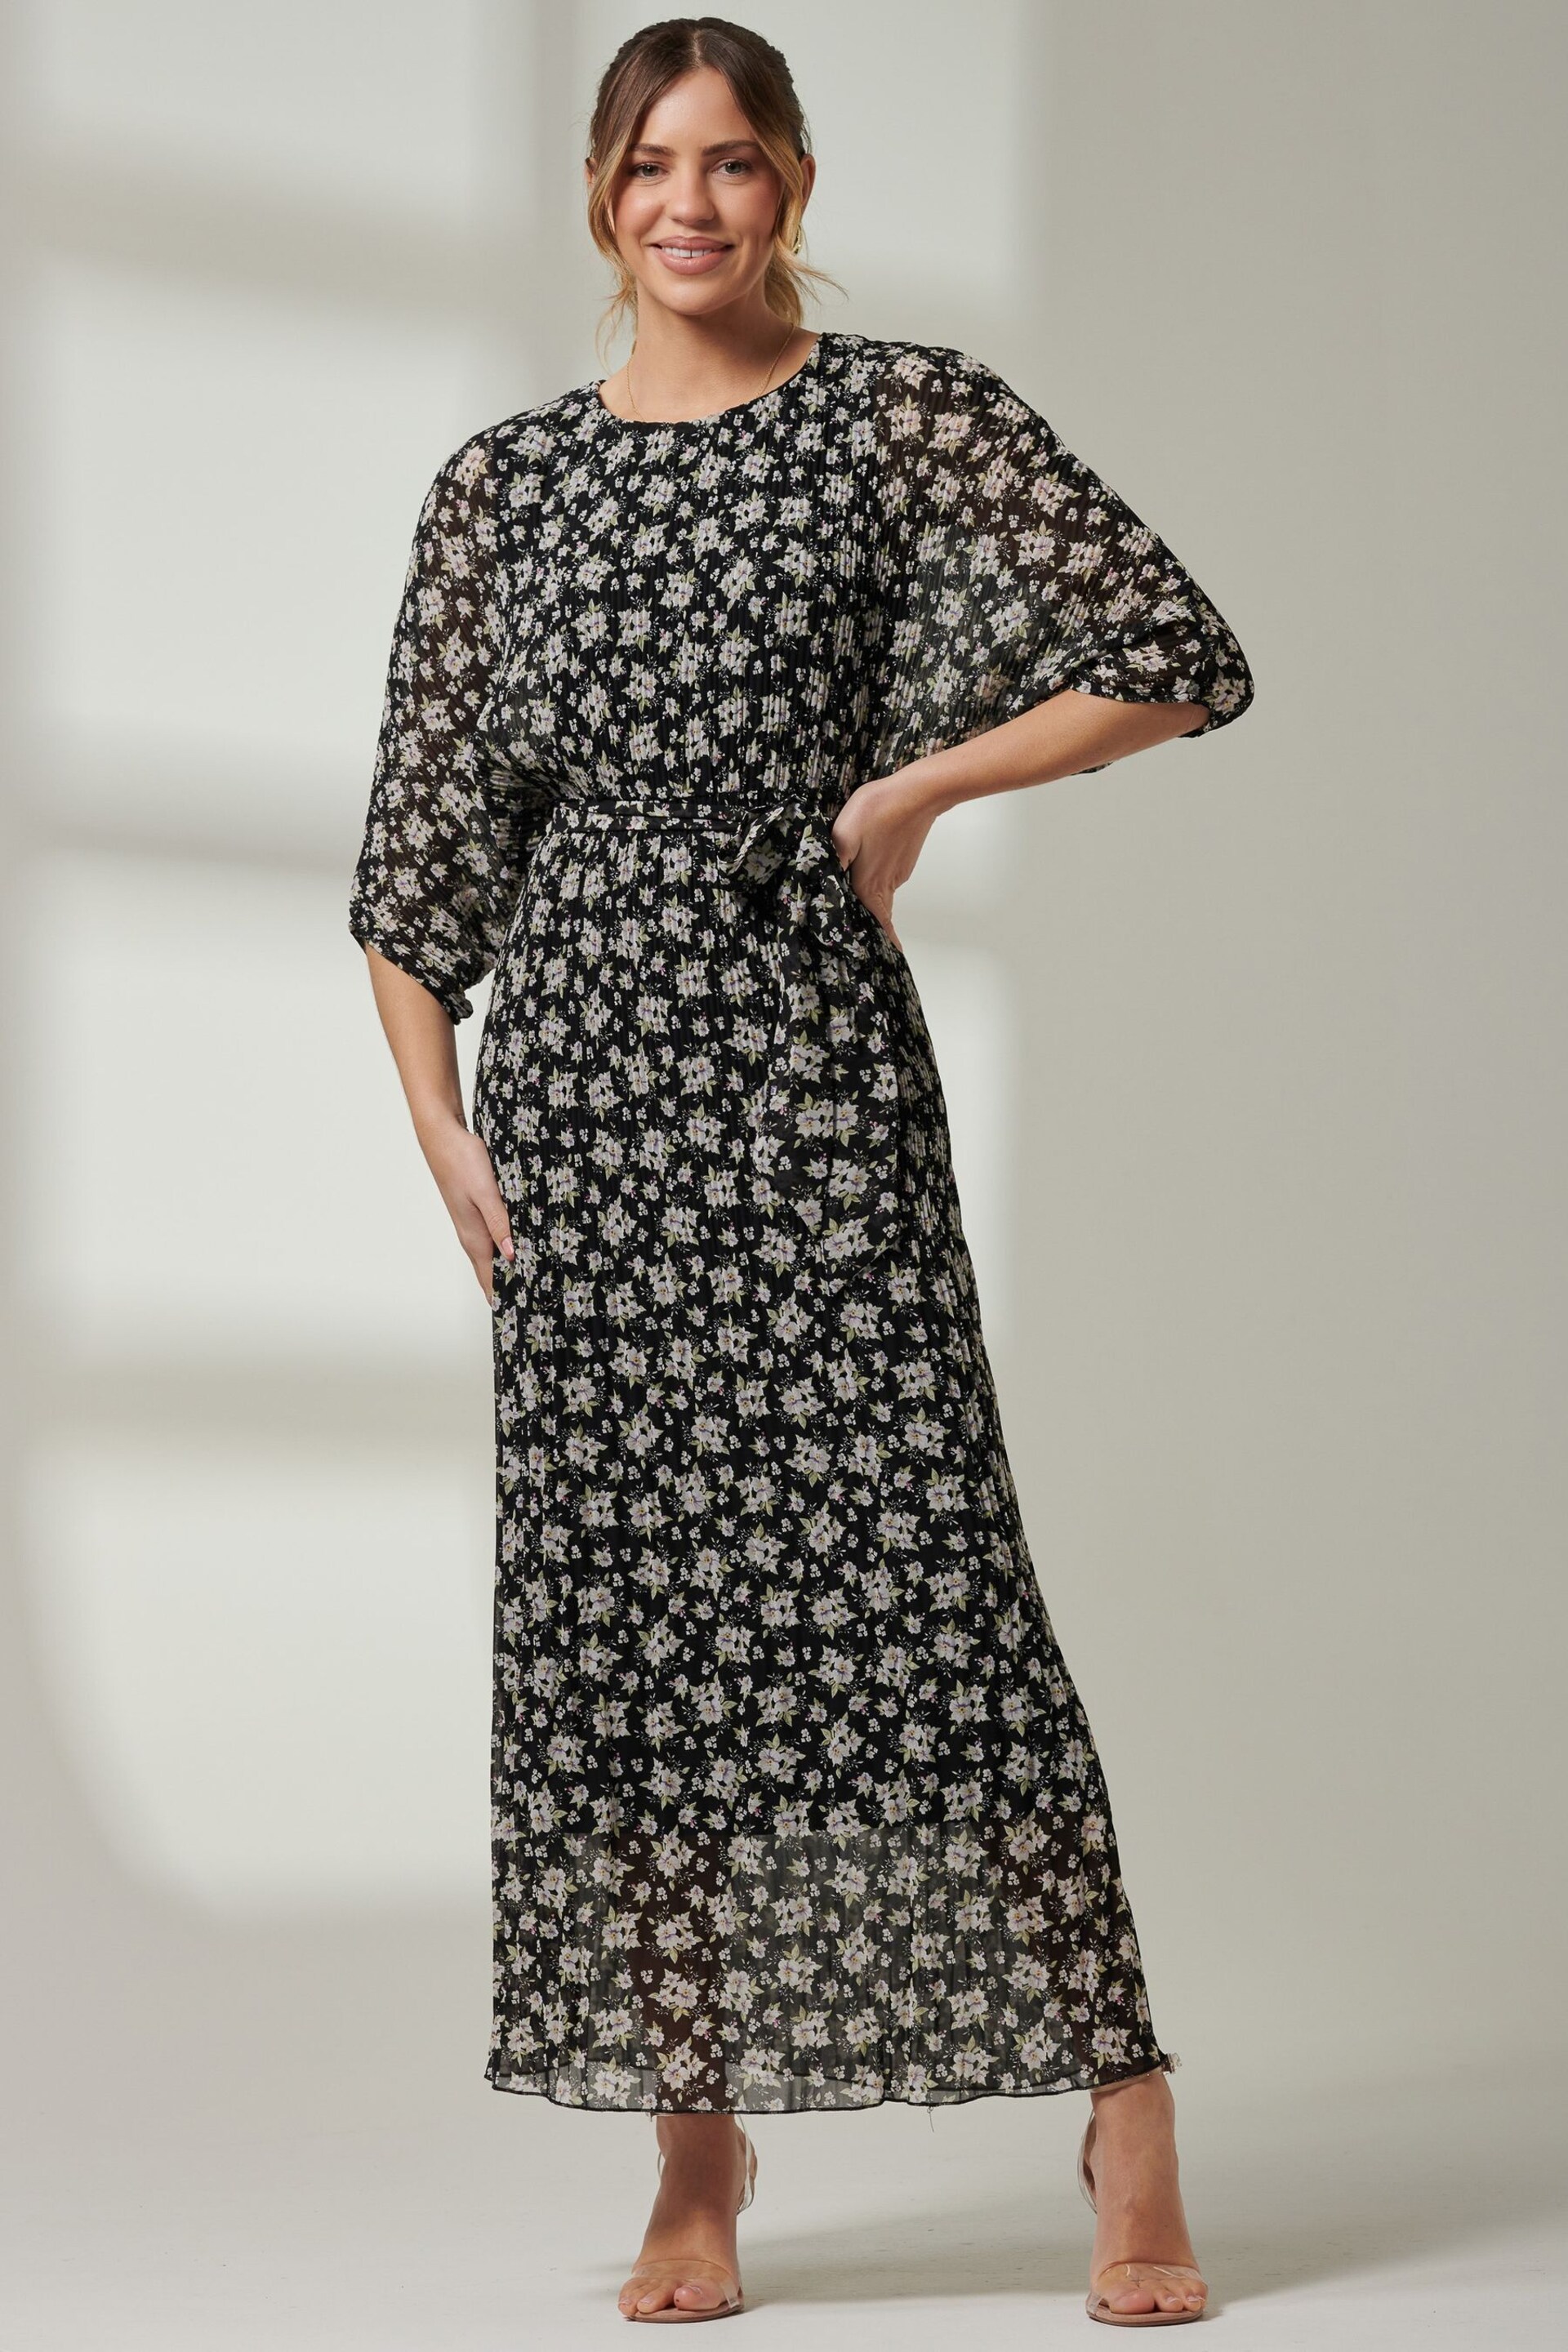 Jolie Moi Black Pleated Waist Tie Chiffon Maxi Dress - Image 1 of 7